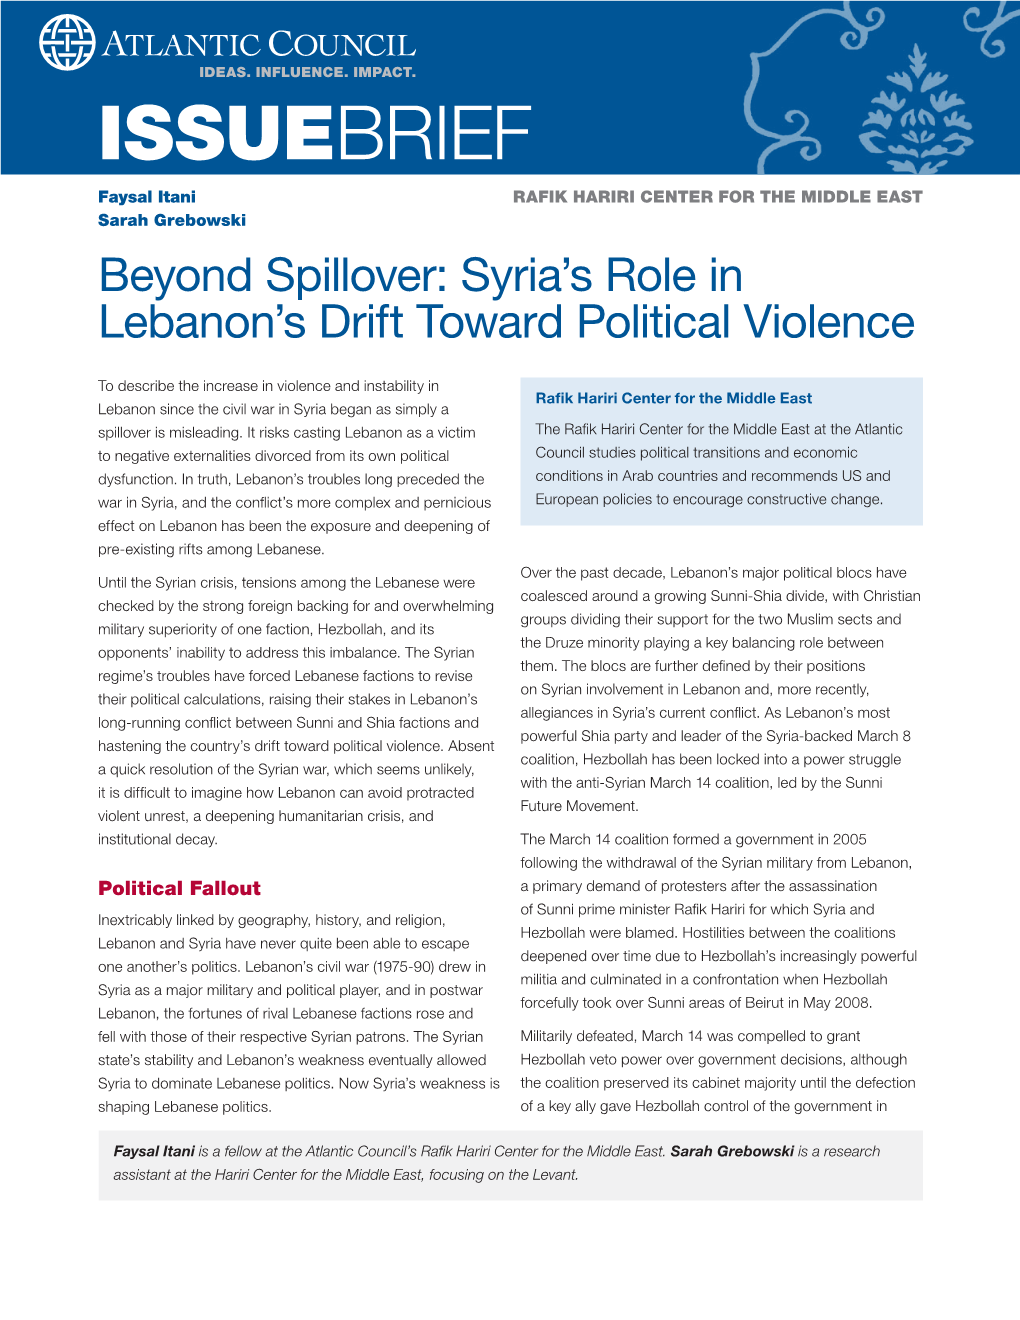 Beyond Spillover: Syria's Role in Lebanon's Drift Toward Political